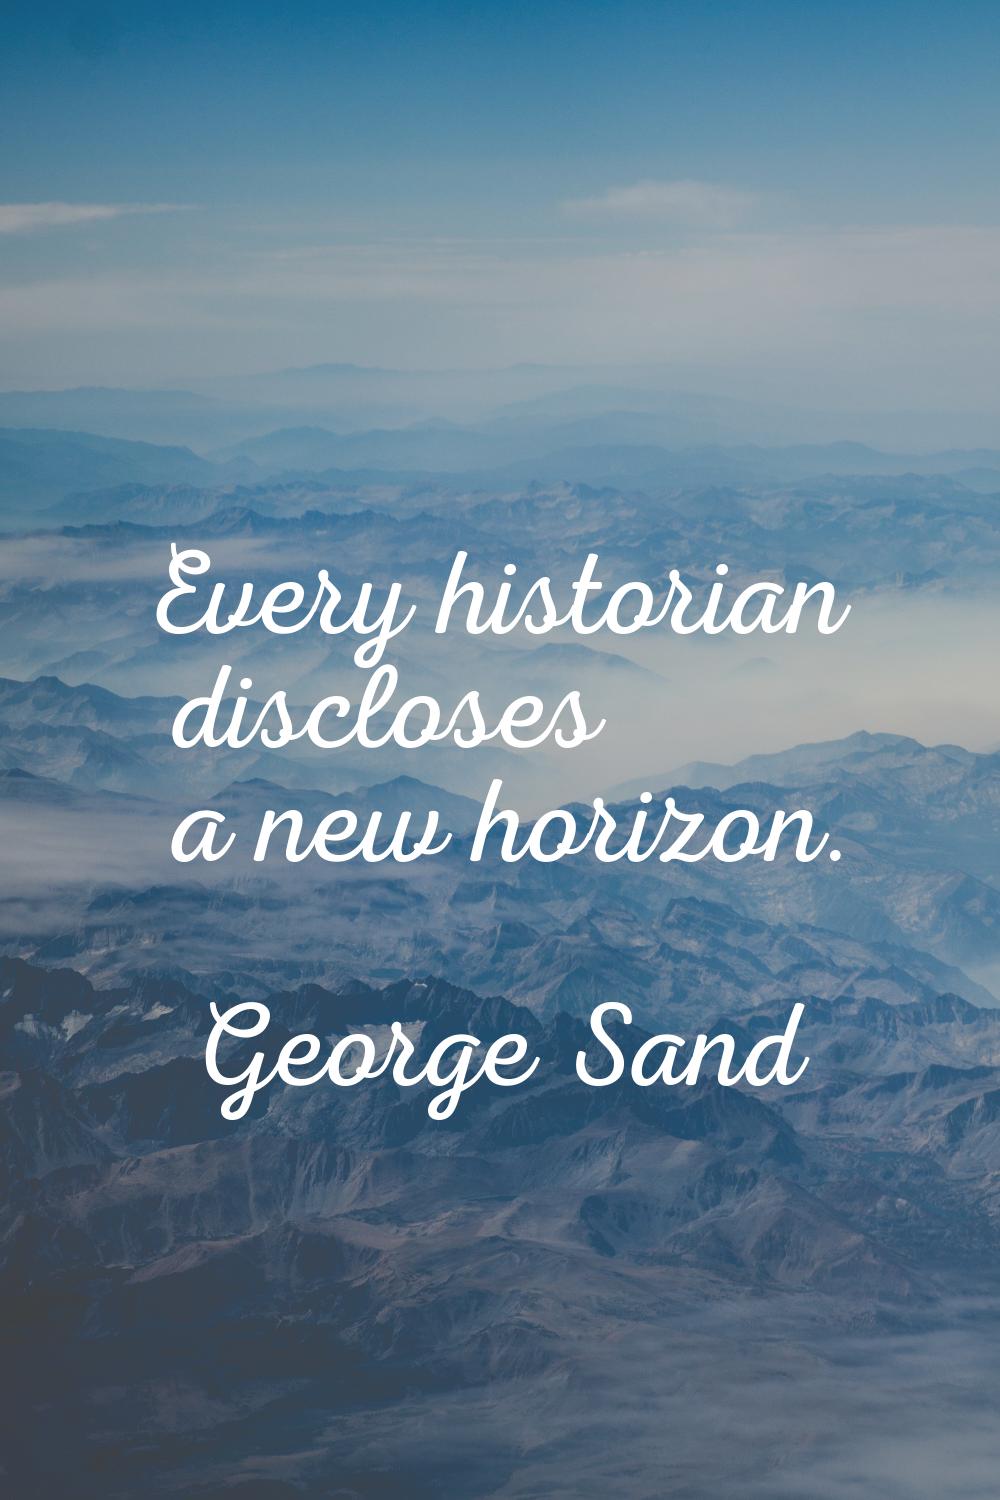 Every historian discloses a new horizon.